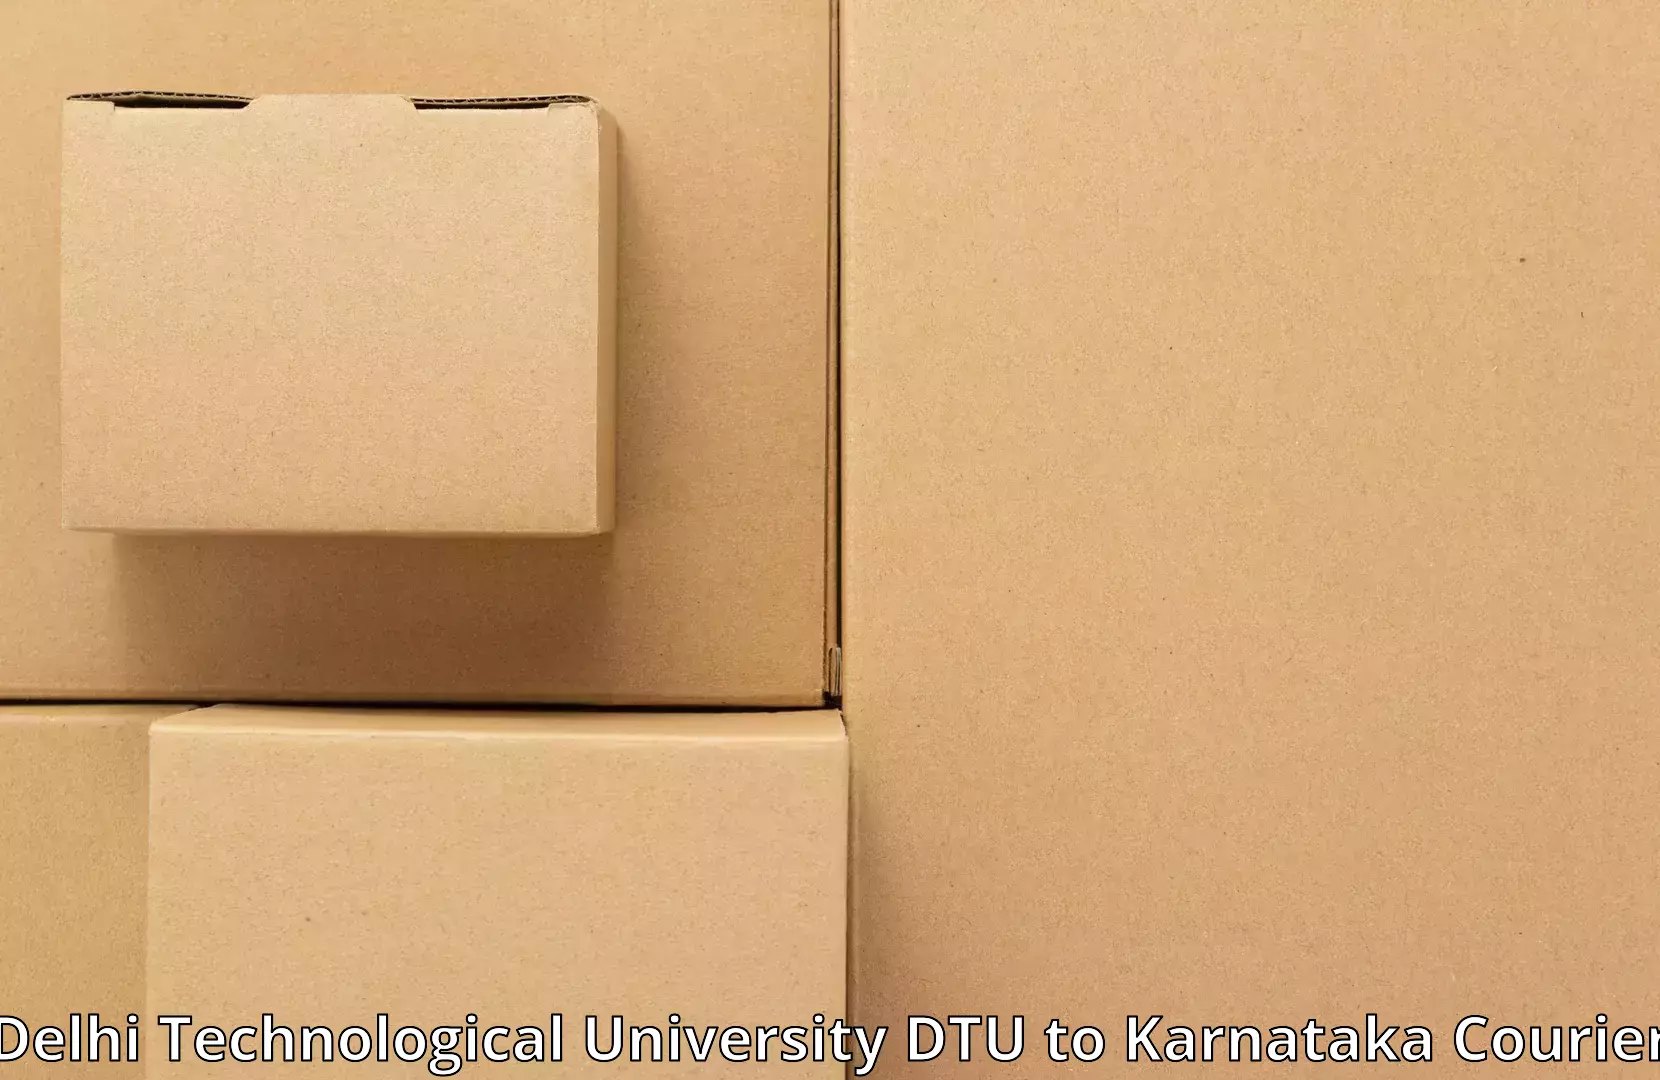 Personalized relocation solutions Delhi Technological University DTU to Karnataka